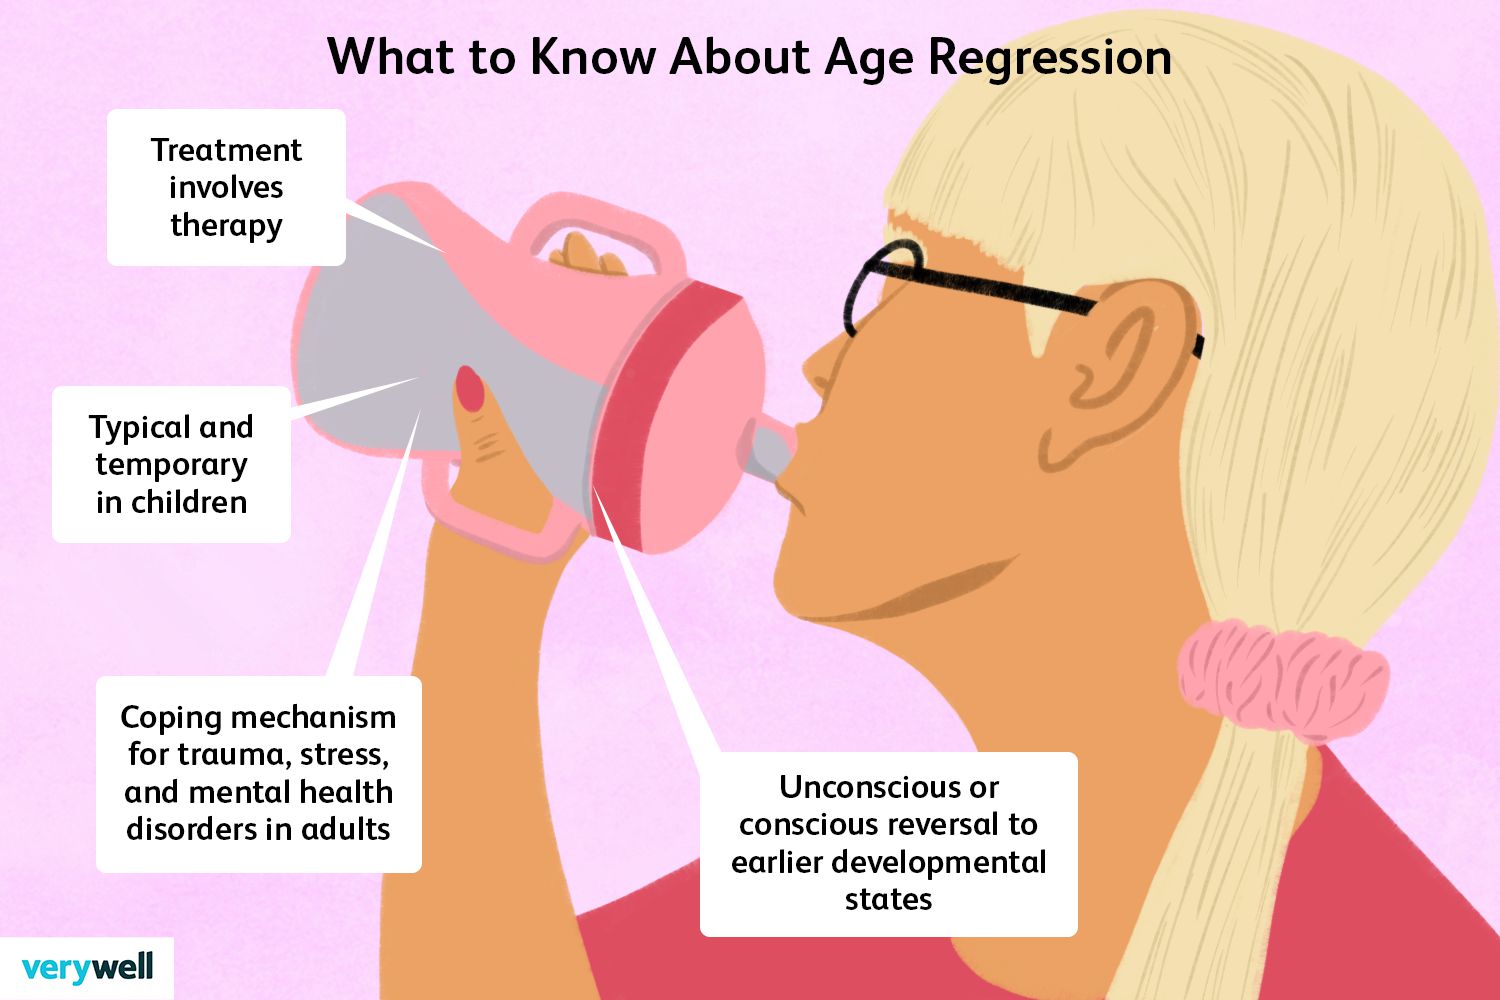 is age regression healthy?